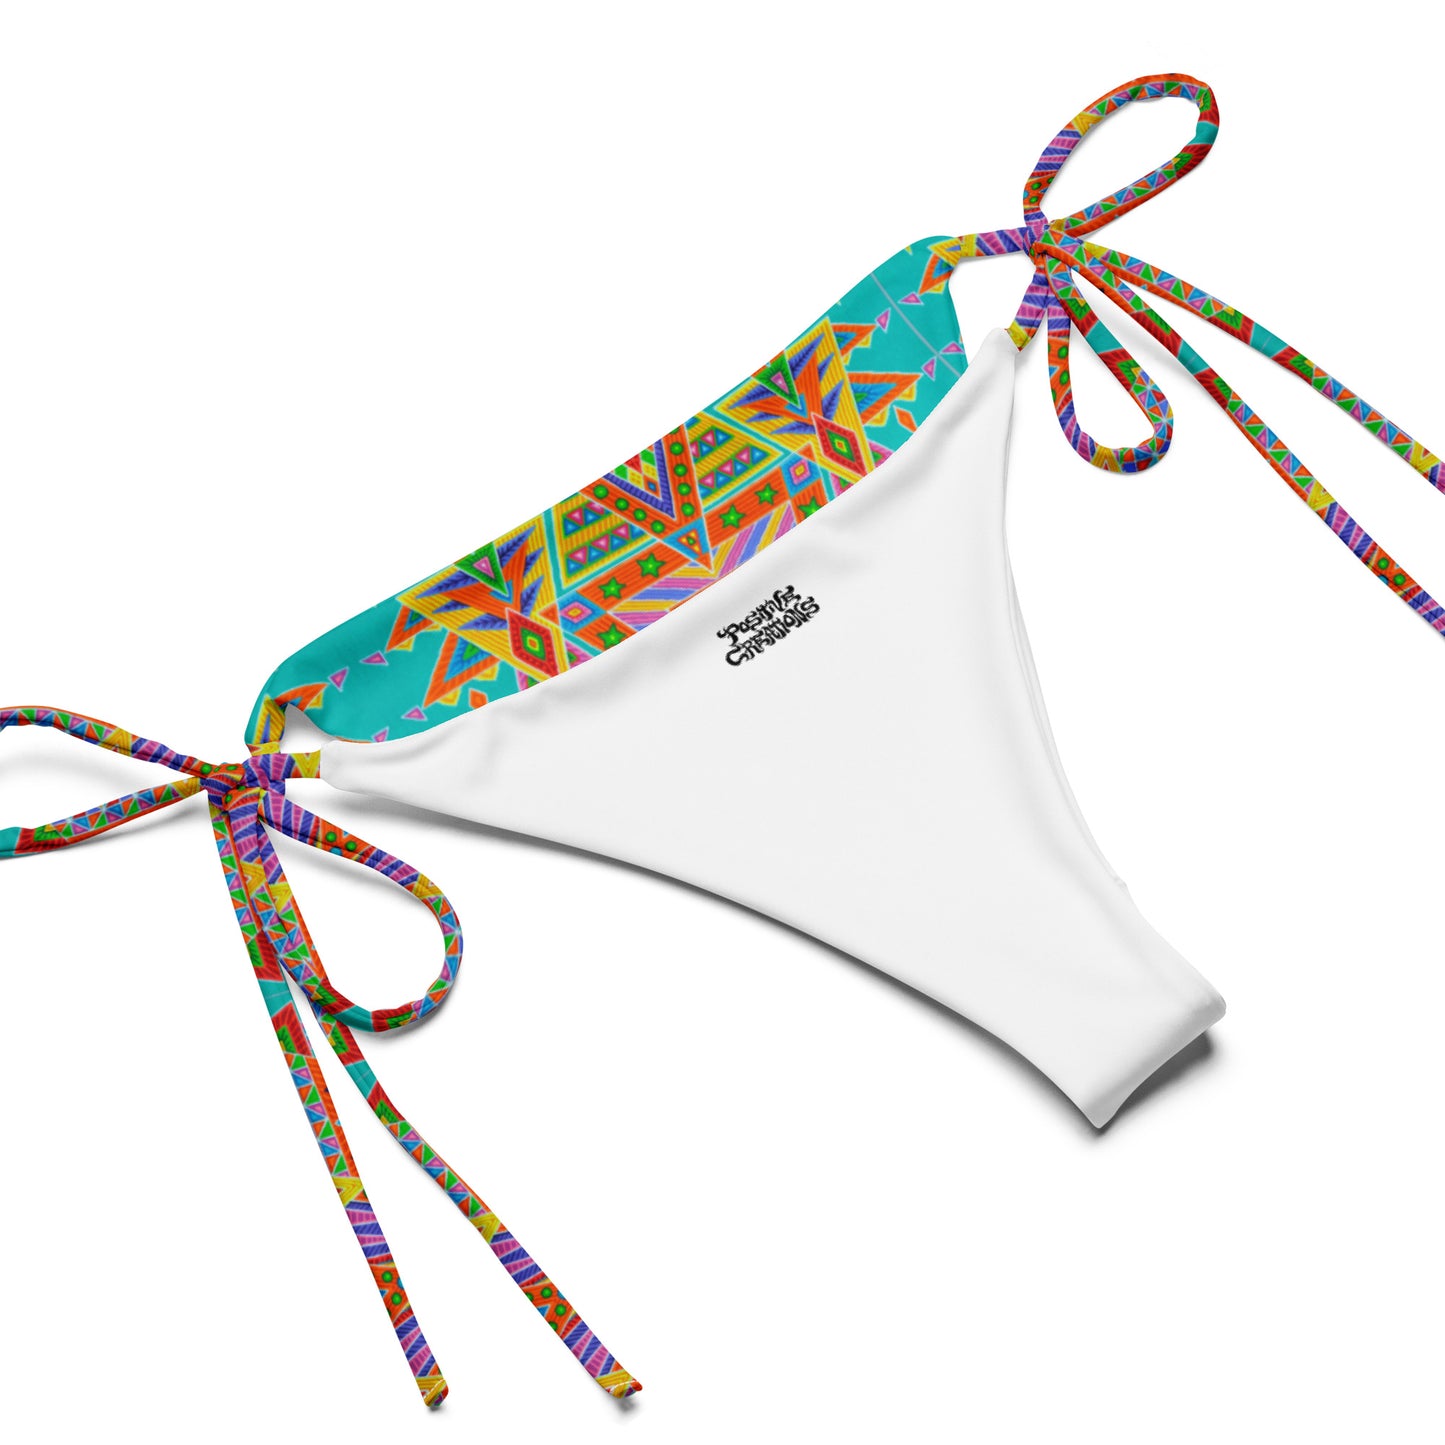 "Chris-talization Codes" Recycled String Bikini